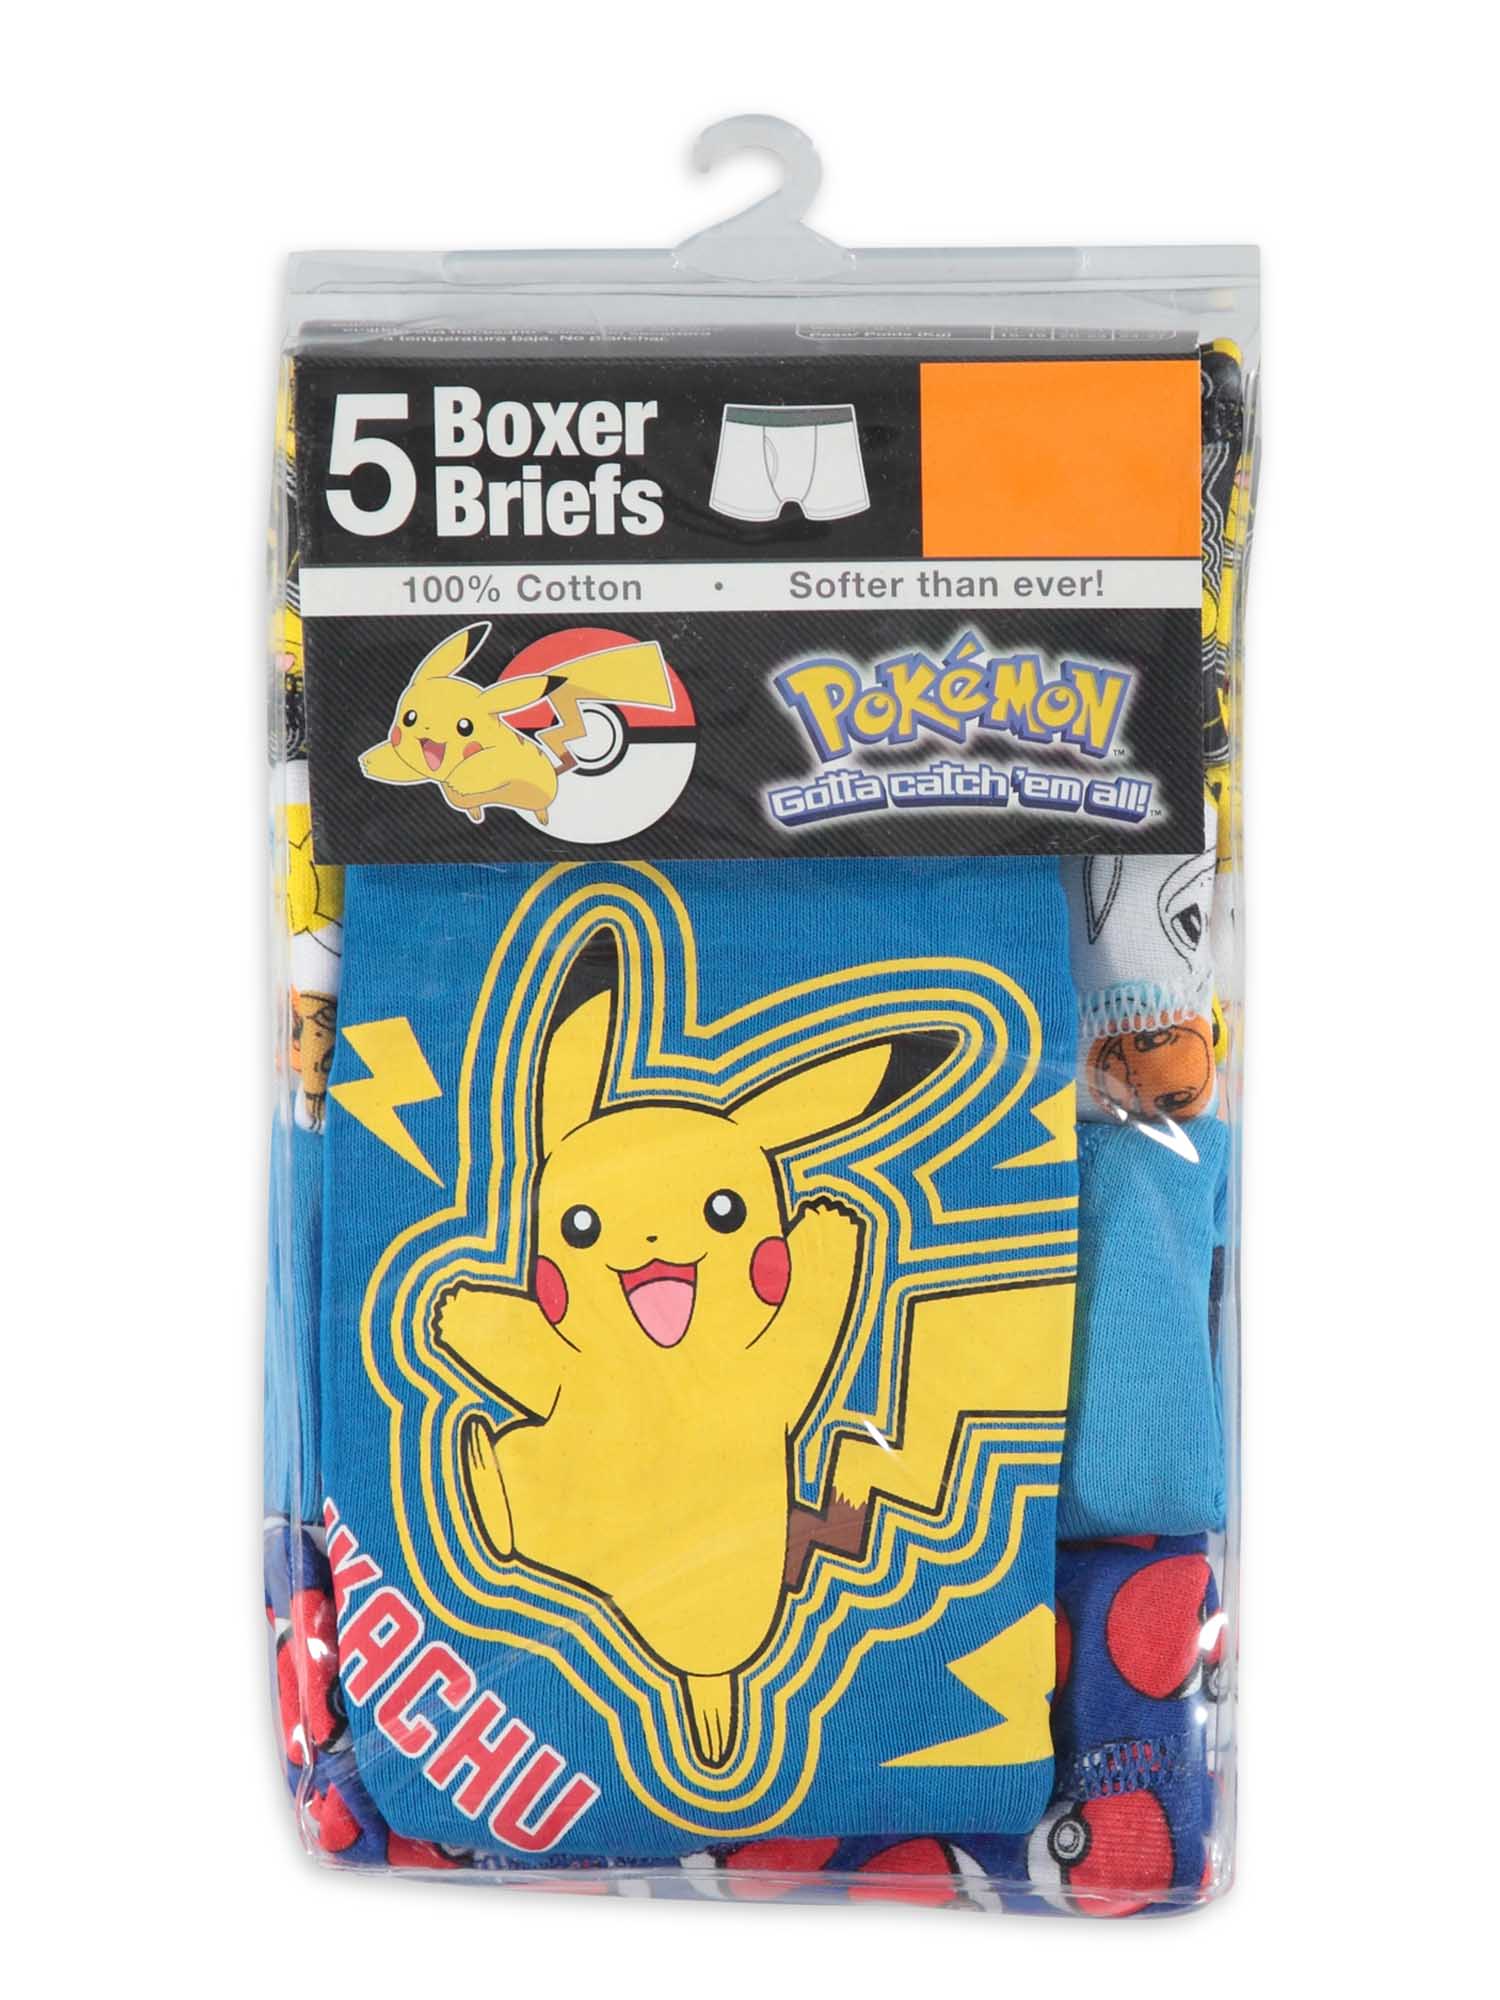 Pokemon Boys Underwear, 5 Pack Boxer Briefs Sizes 4-8 - image 3 of 3